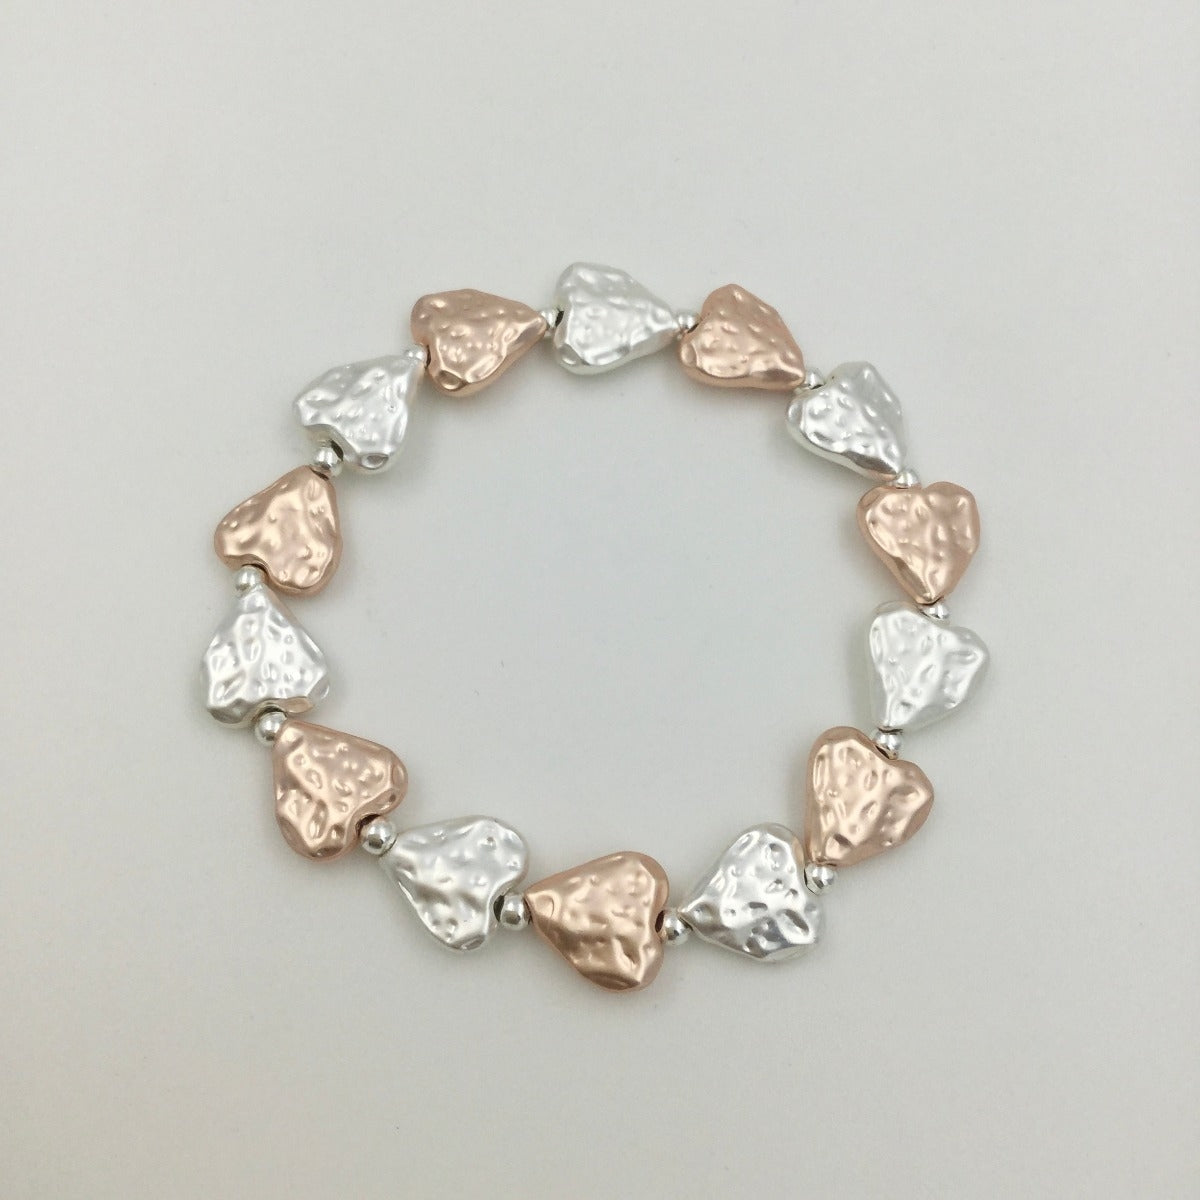 Hammered heart silver and rose gold bracelet